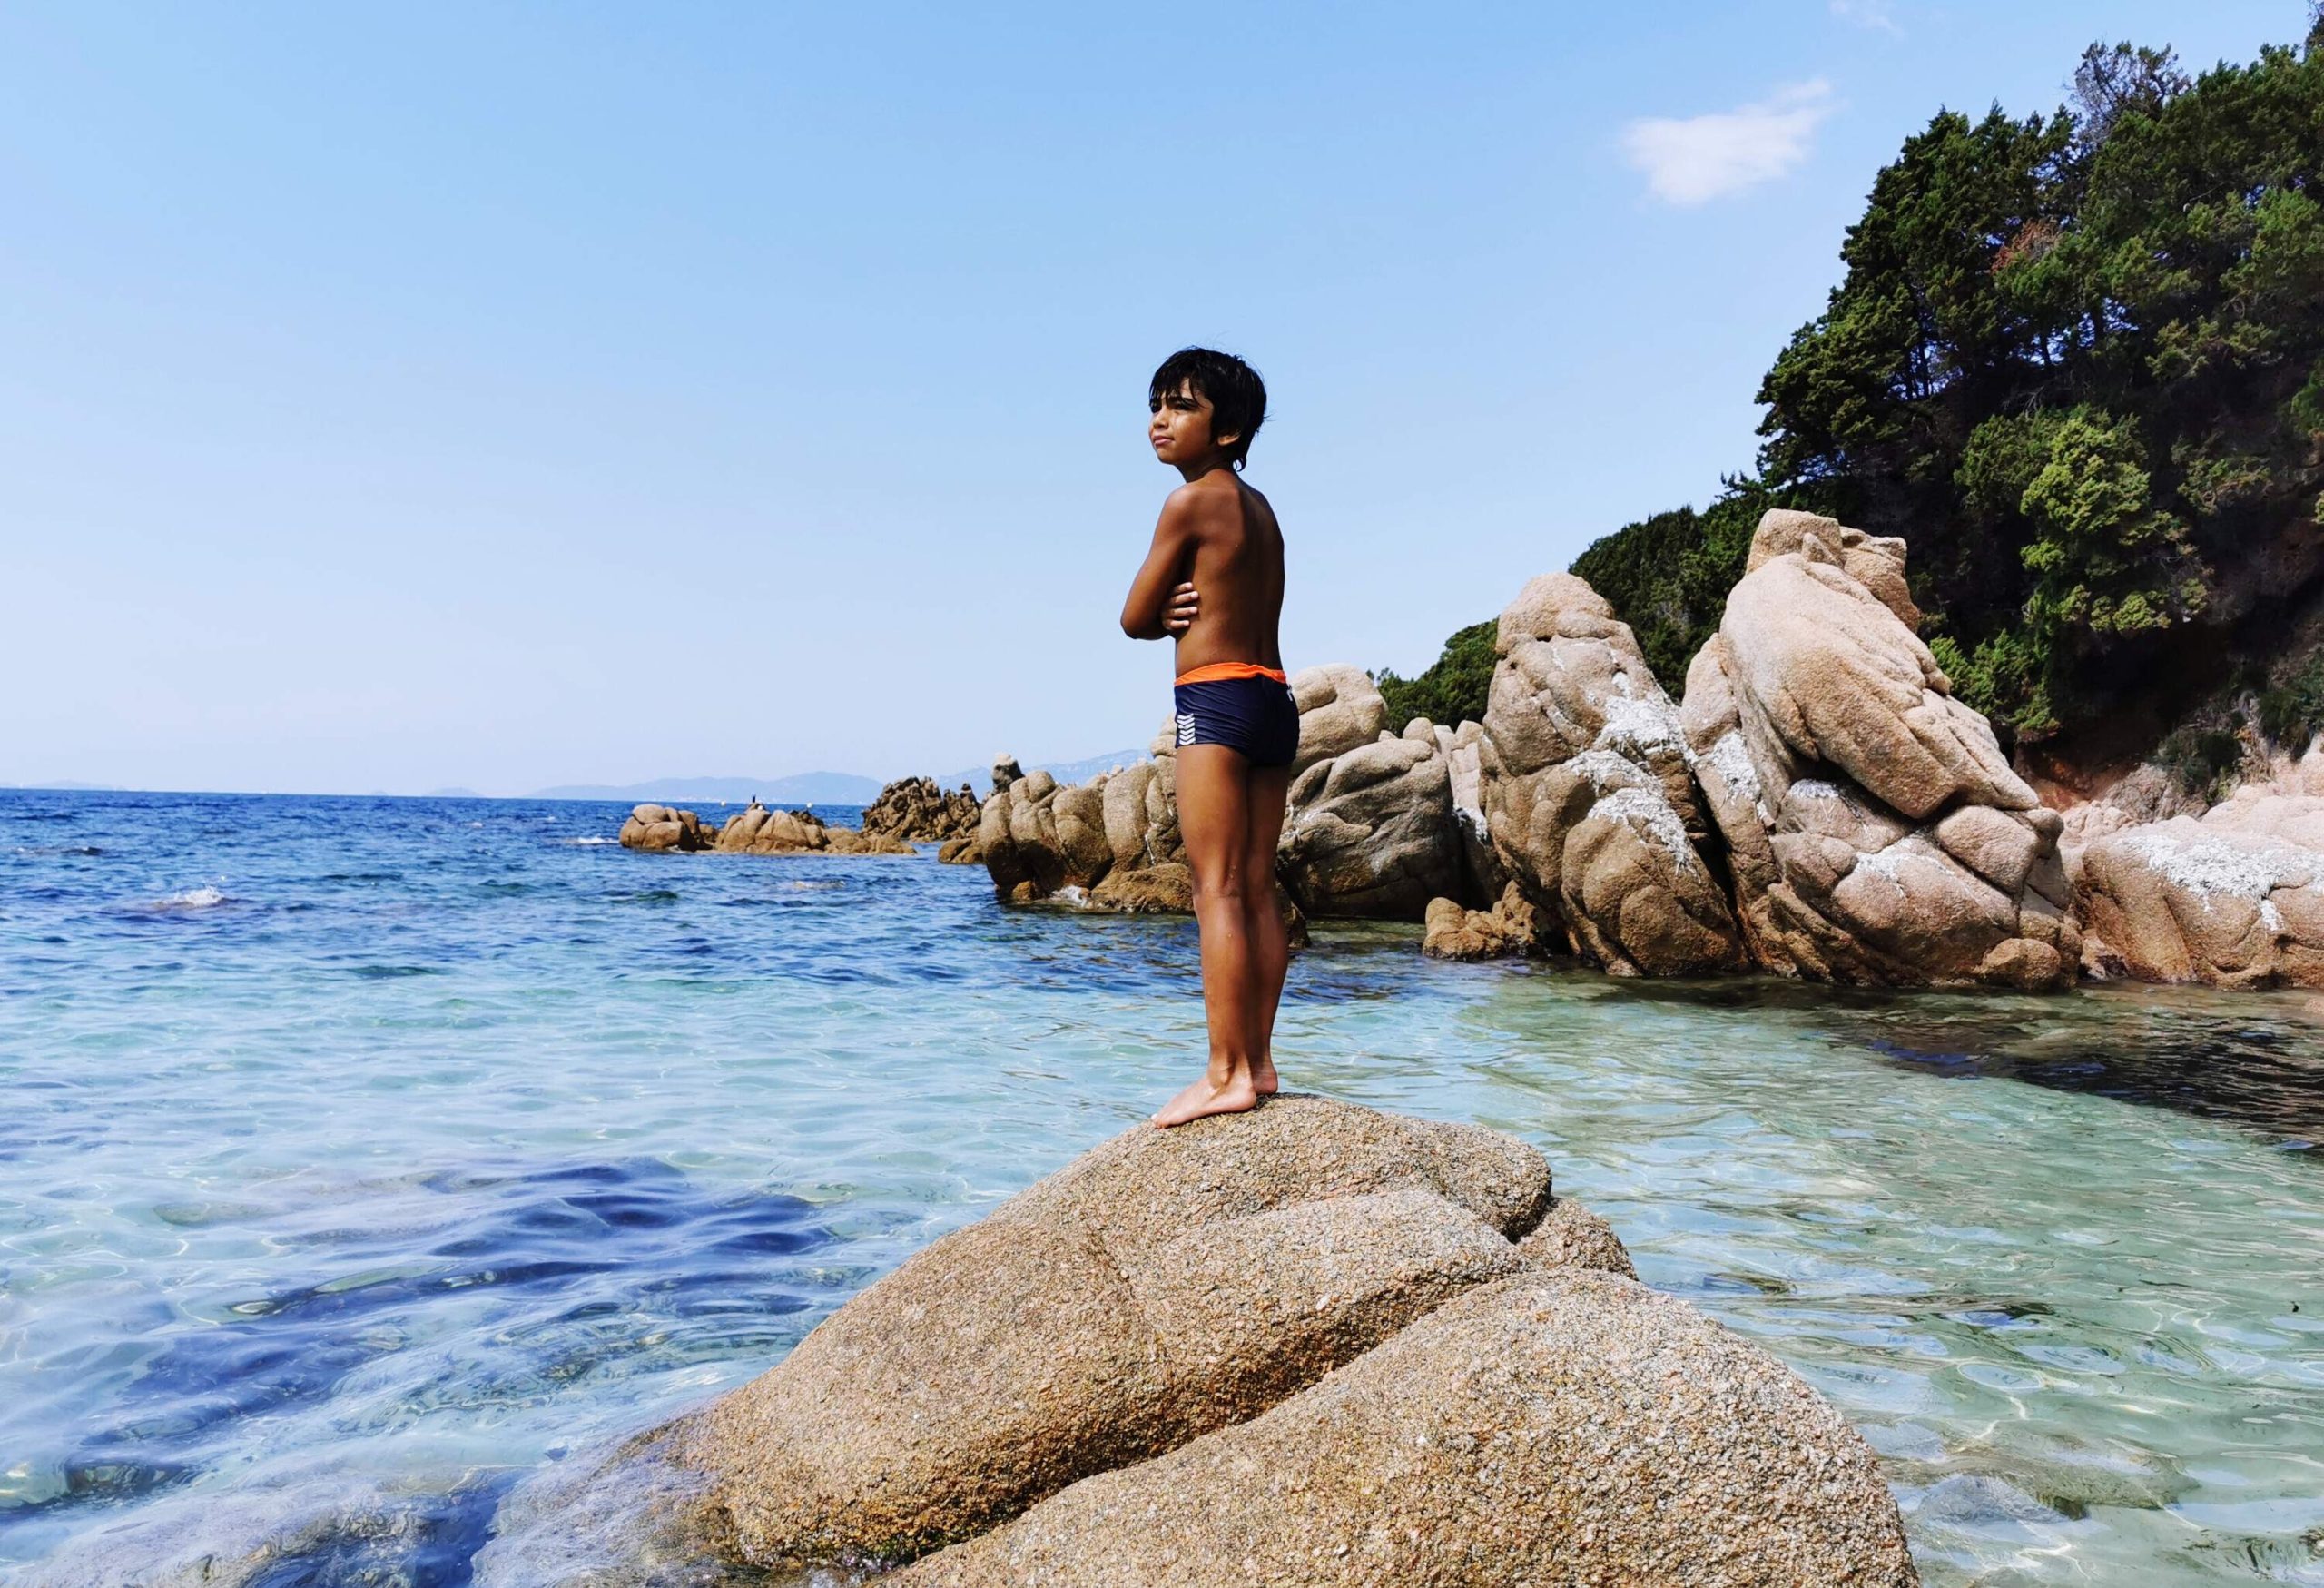 A kid in swimwear stands on a giant boulder along a rocky coastline.